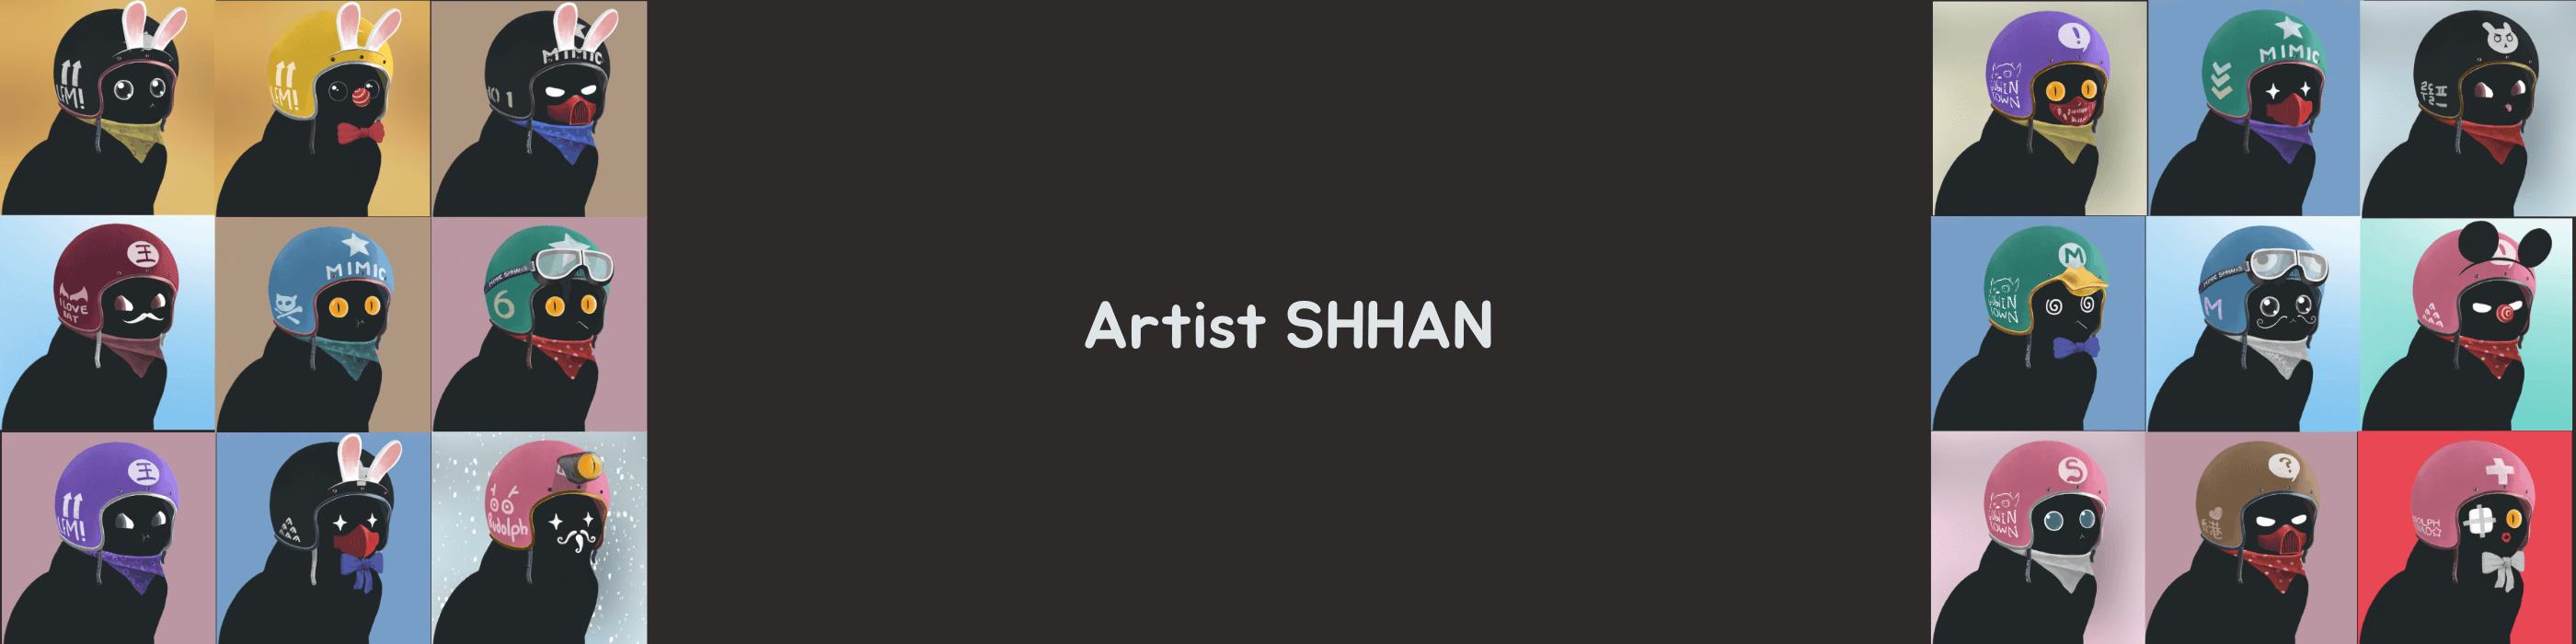 SHHAN1210 banner